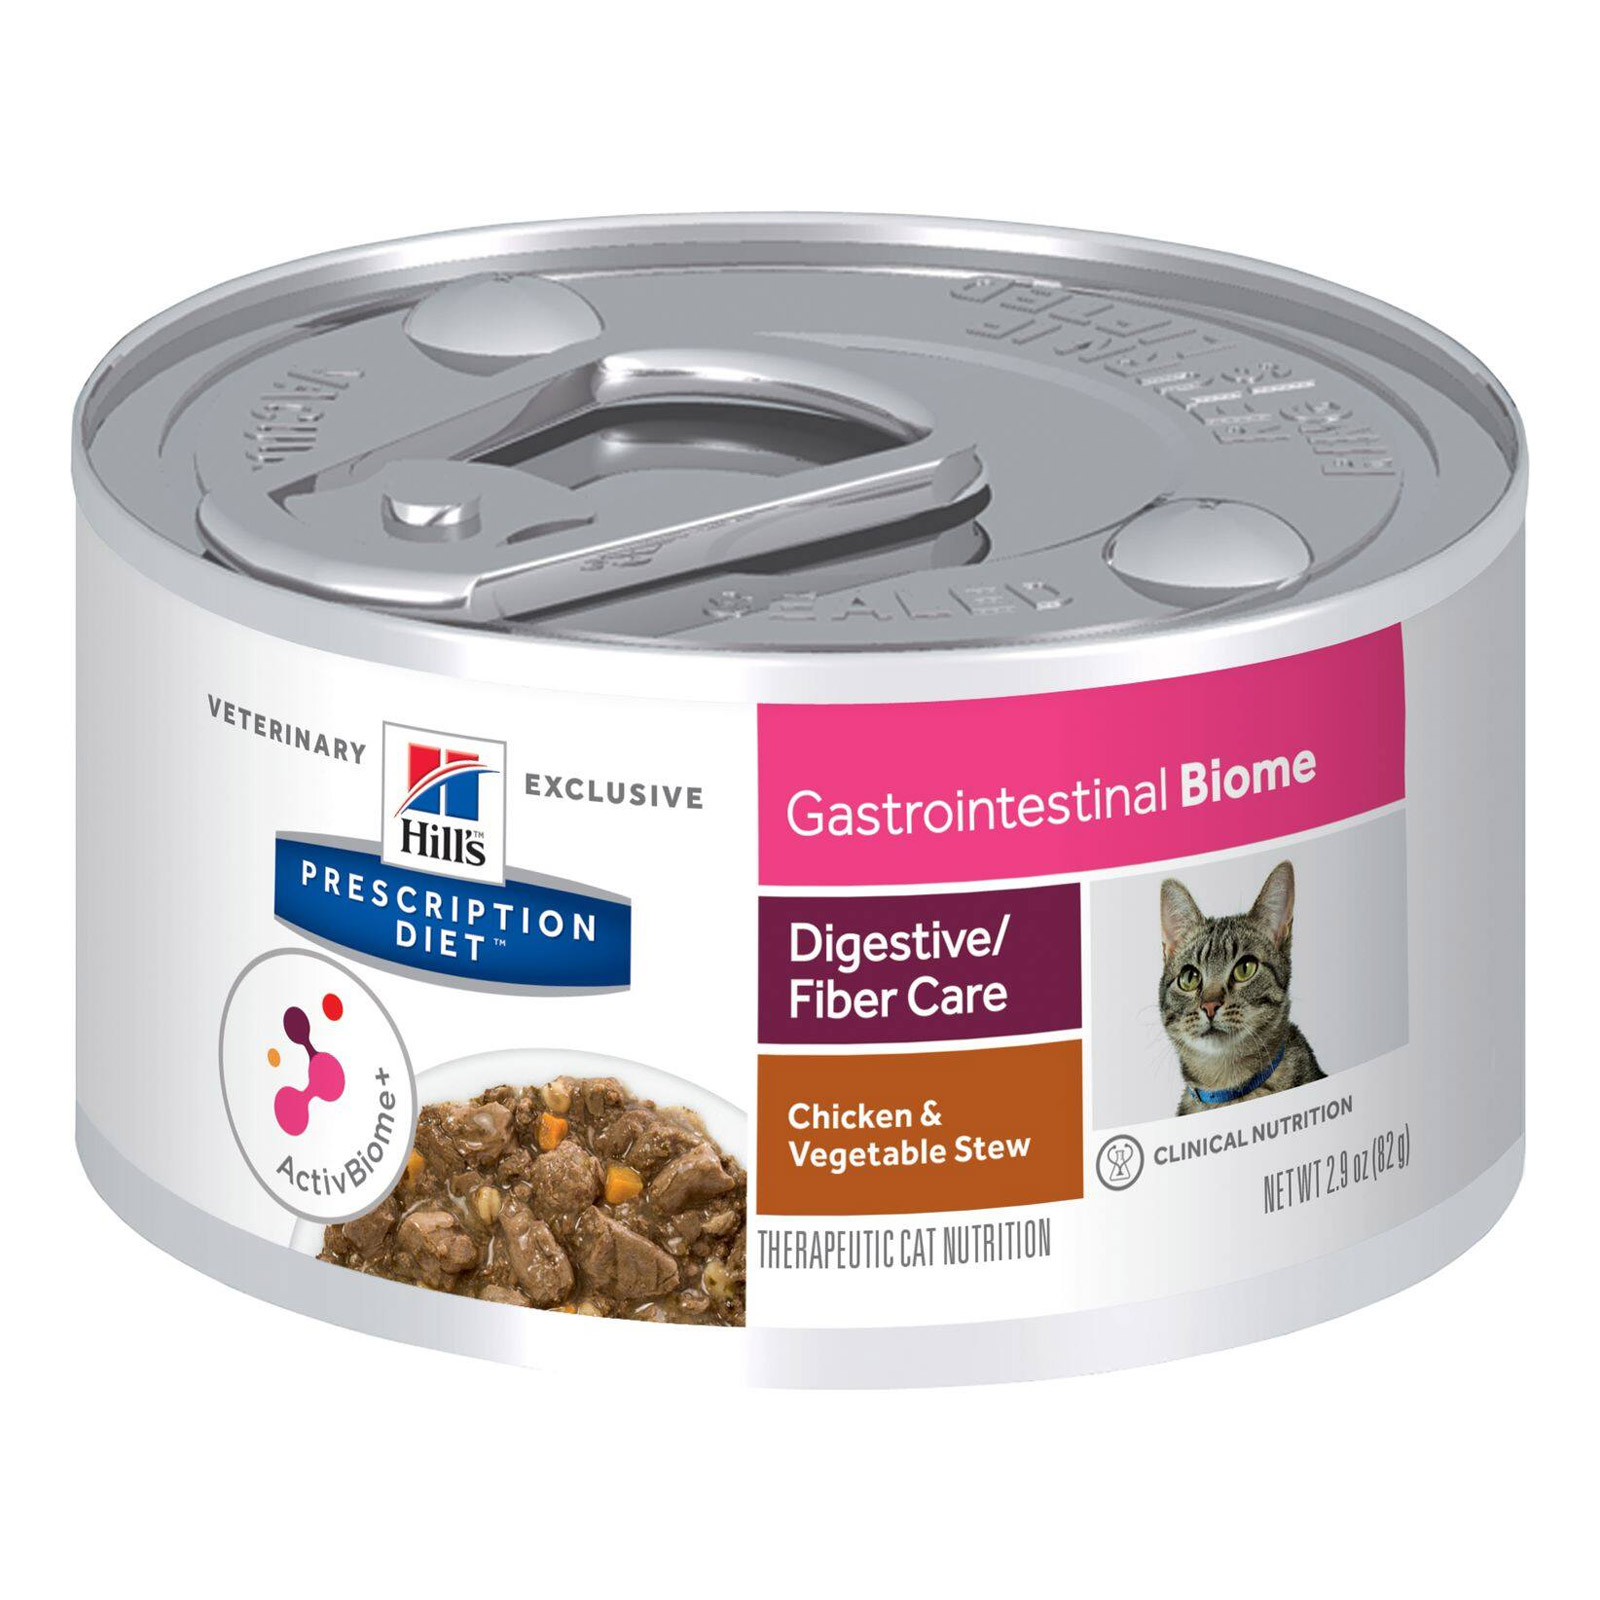 Hill's Prescription Diet Gastrointestinal Biome Wet Cat Food for Food